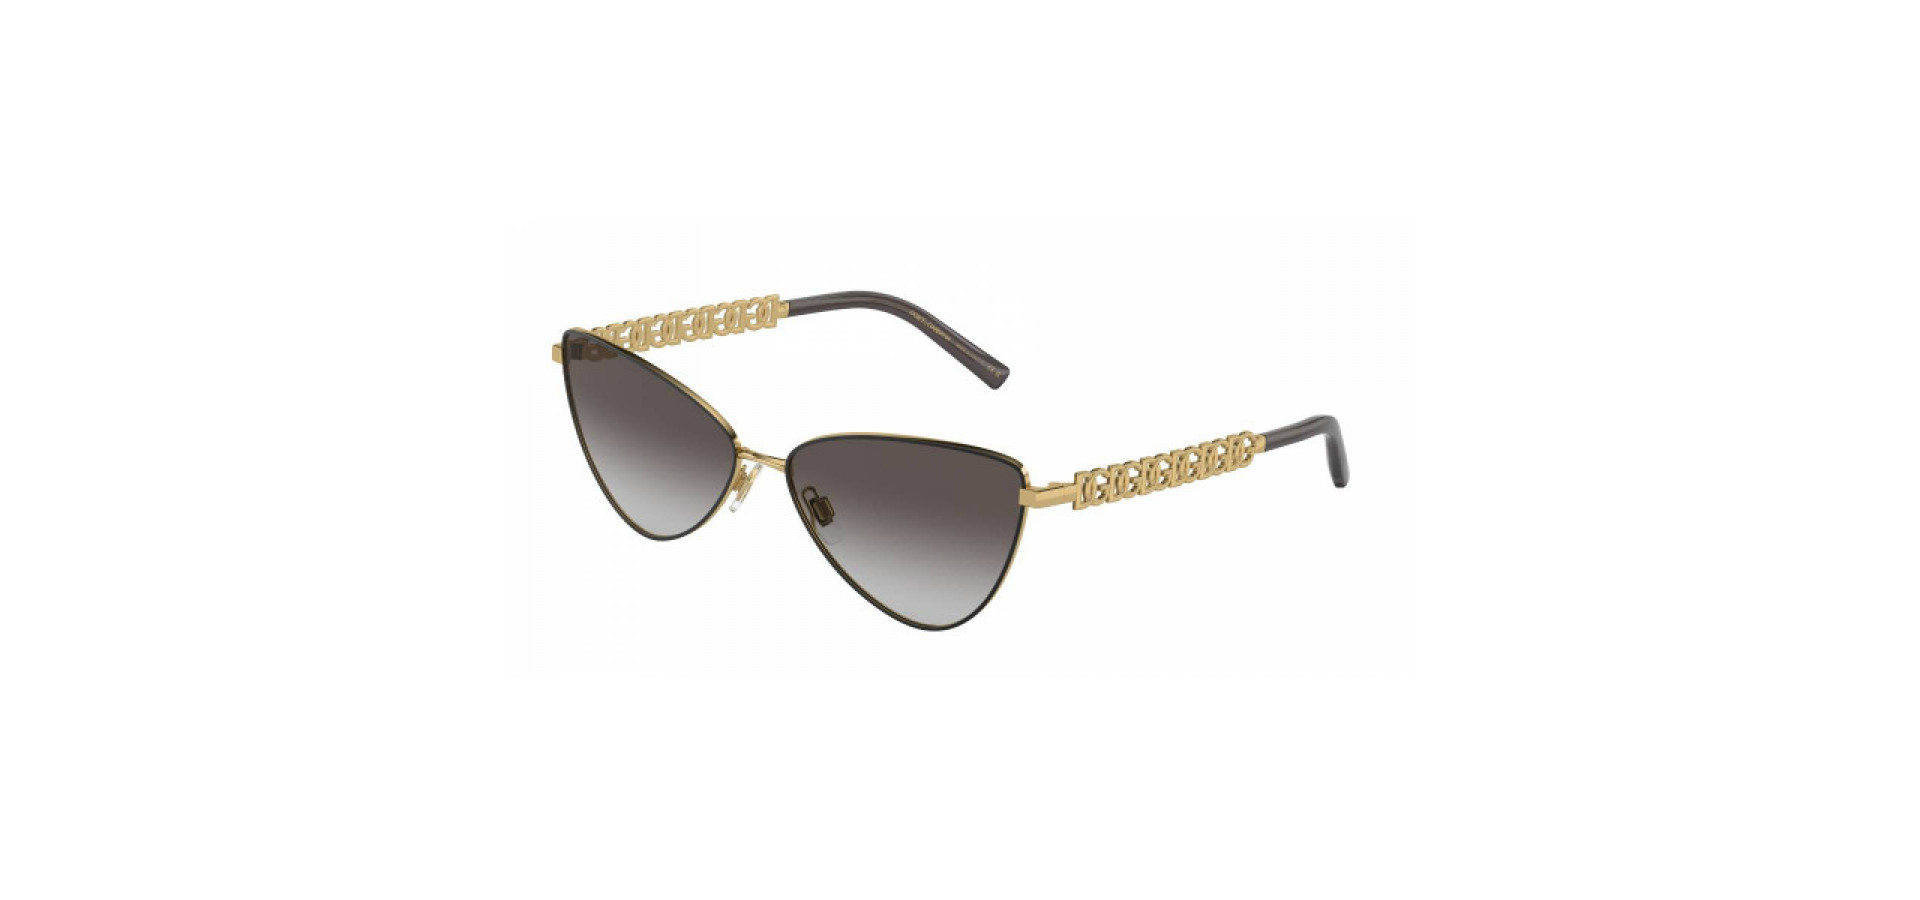 Sunčane naočale Dolce&Gabbana DOLCE&GABBANA 2290: Boja: Gradual, Veličina: 60mm, Spol: ženske, Materijal: metal